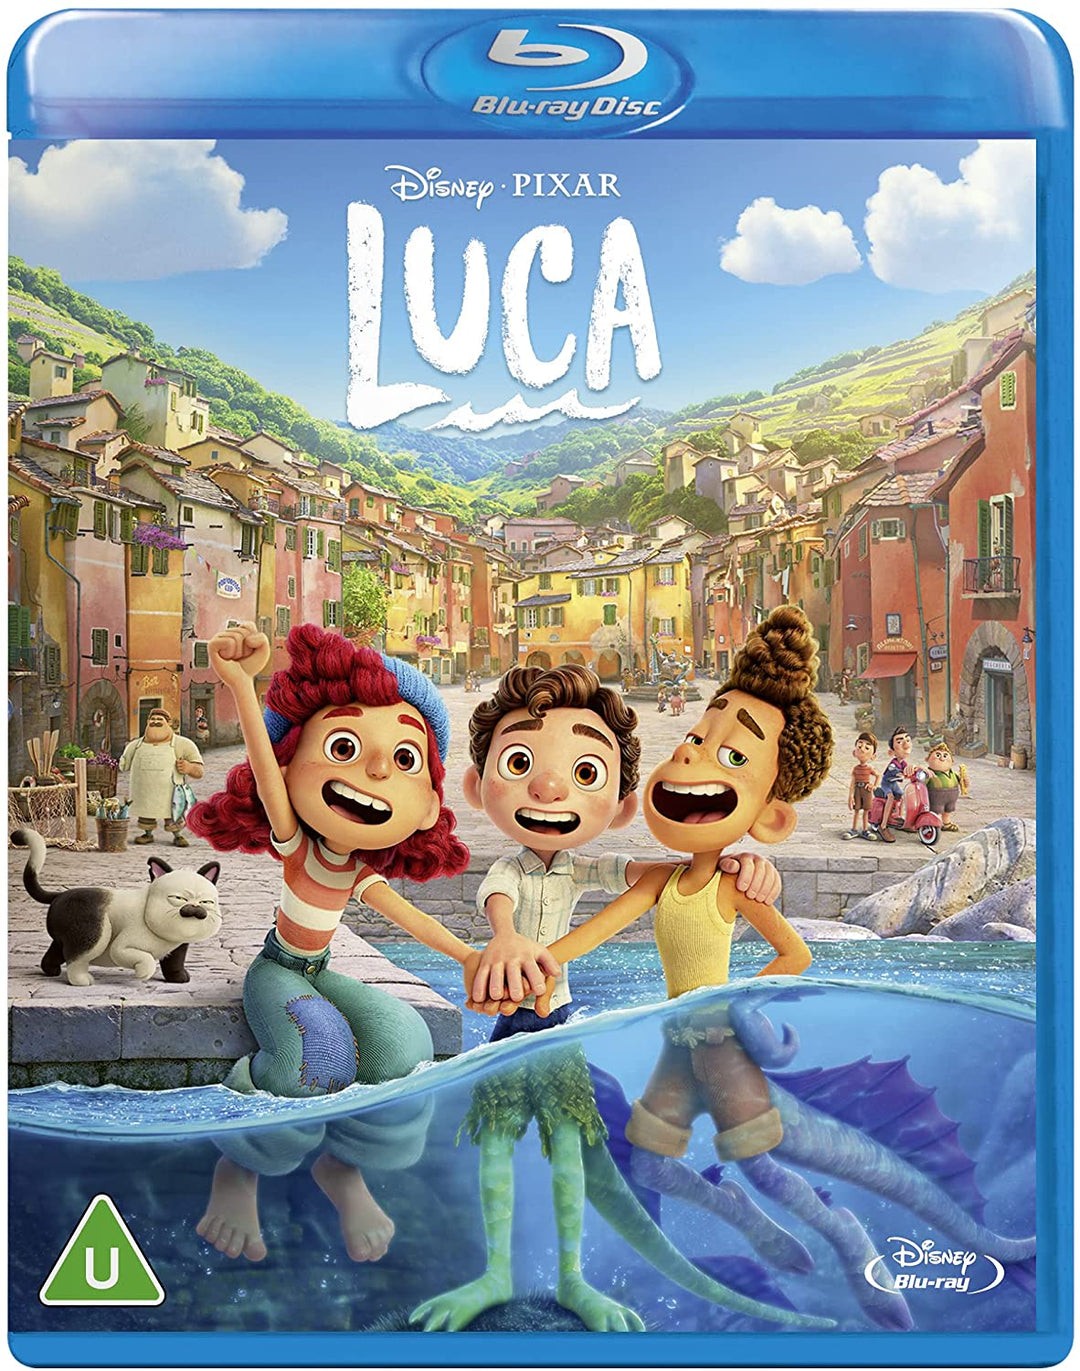 Disney & Pixar's Luca Blu-ray - Animation [Blu-ray]